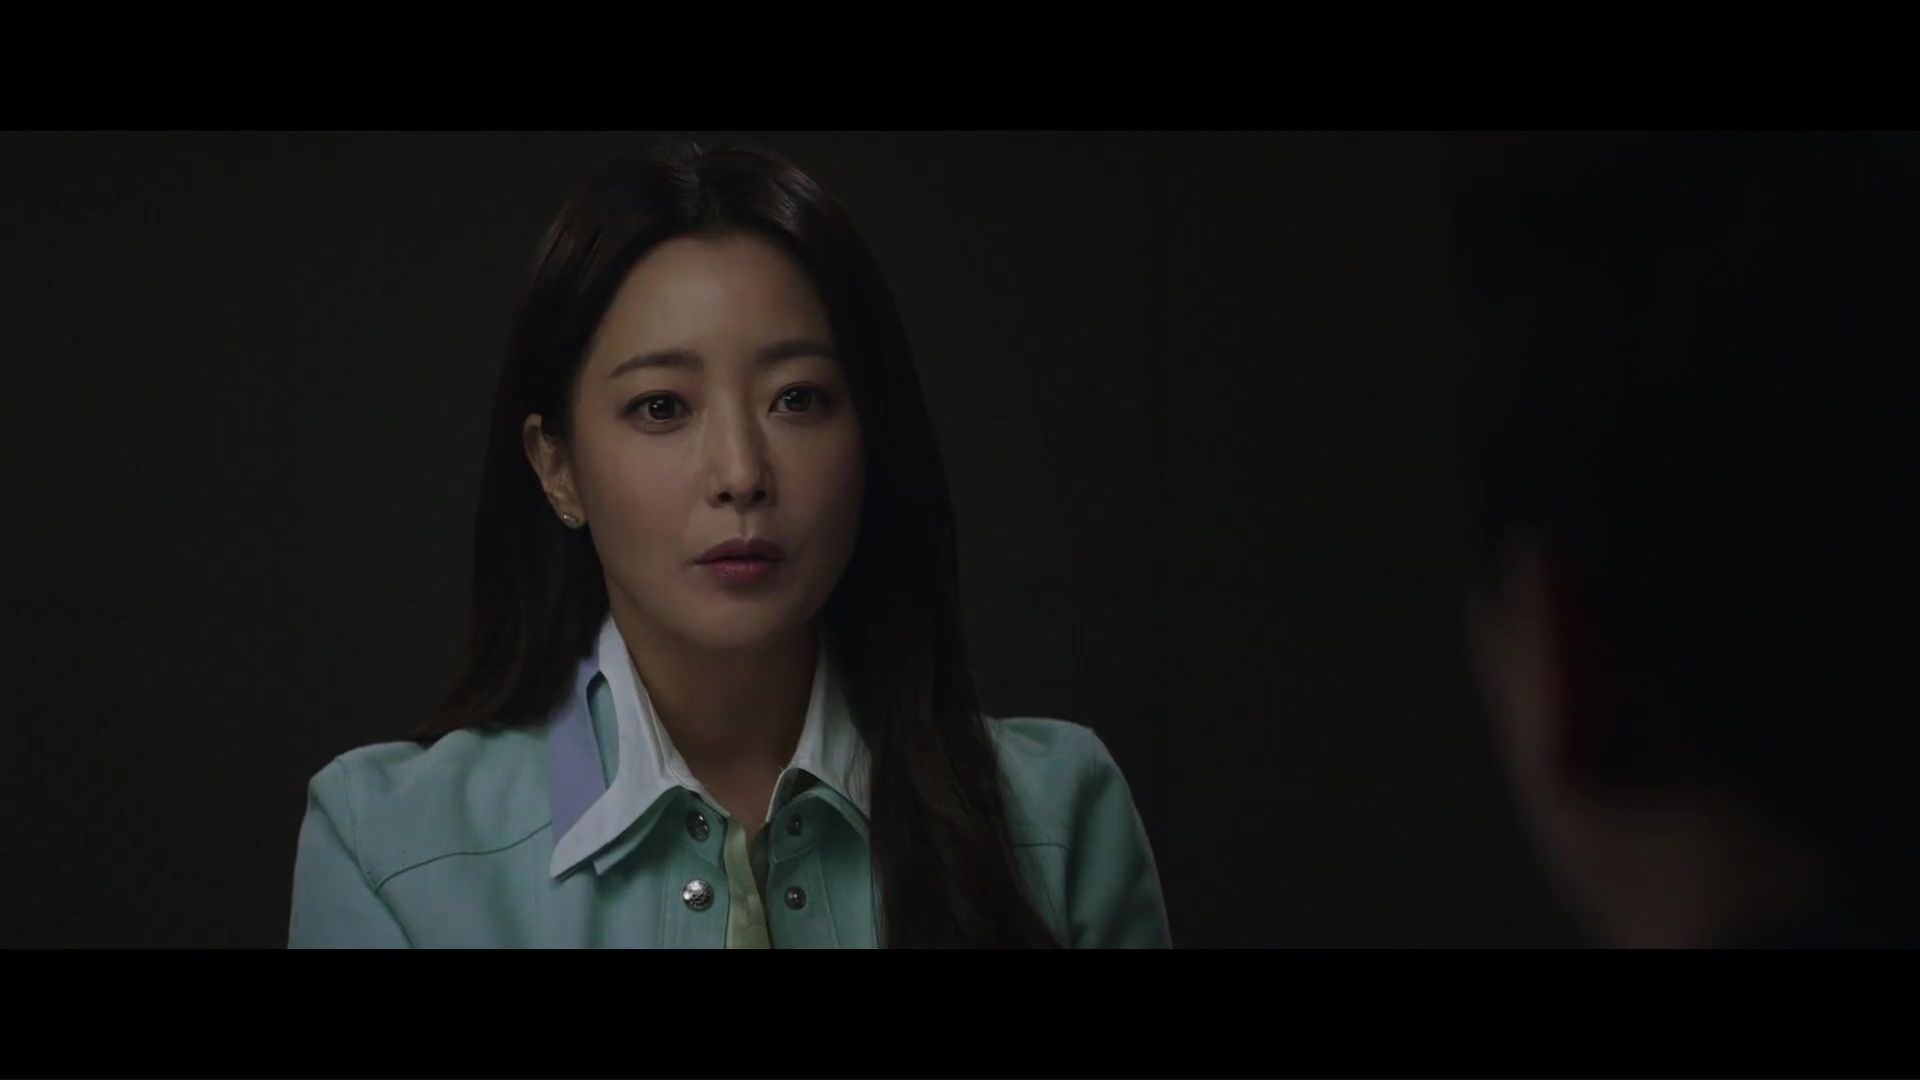 Alice korean drama review